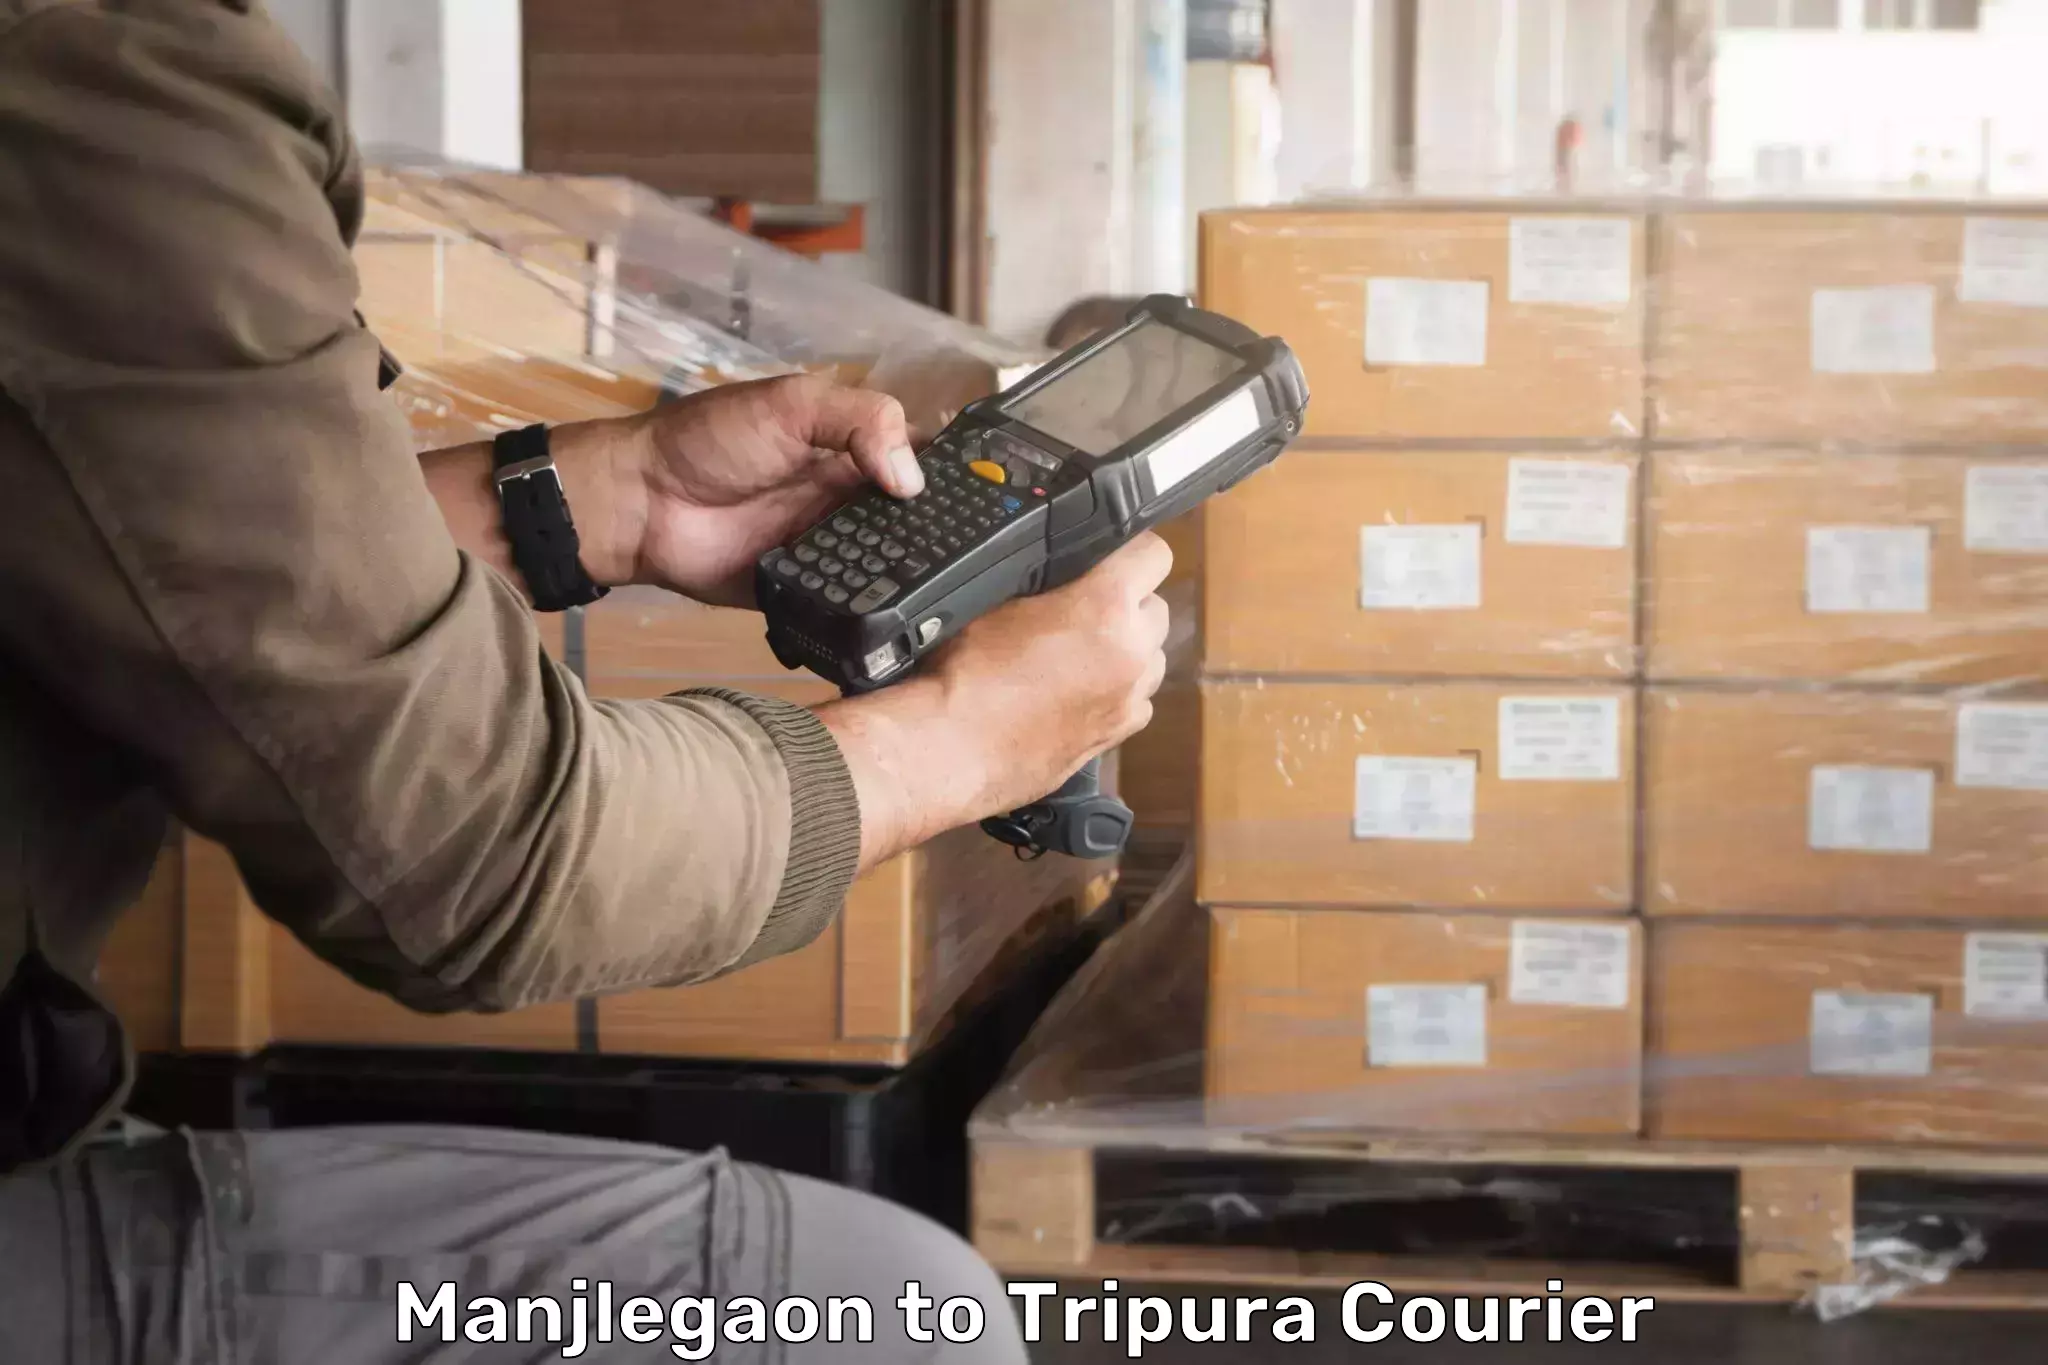 Courier service comparison Manjlegaon to Tripura